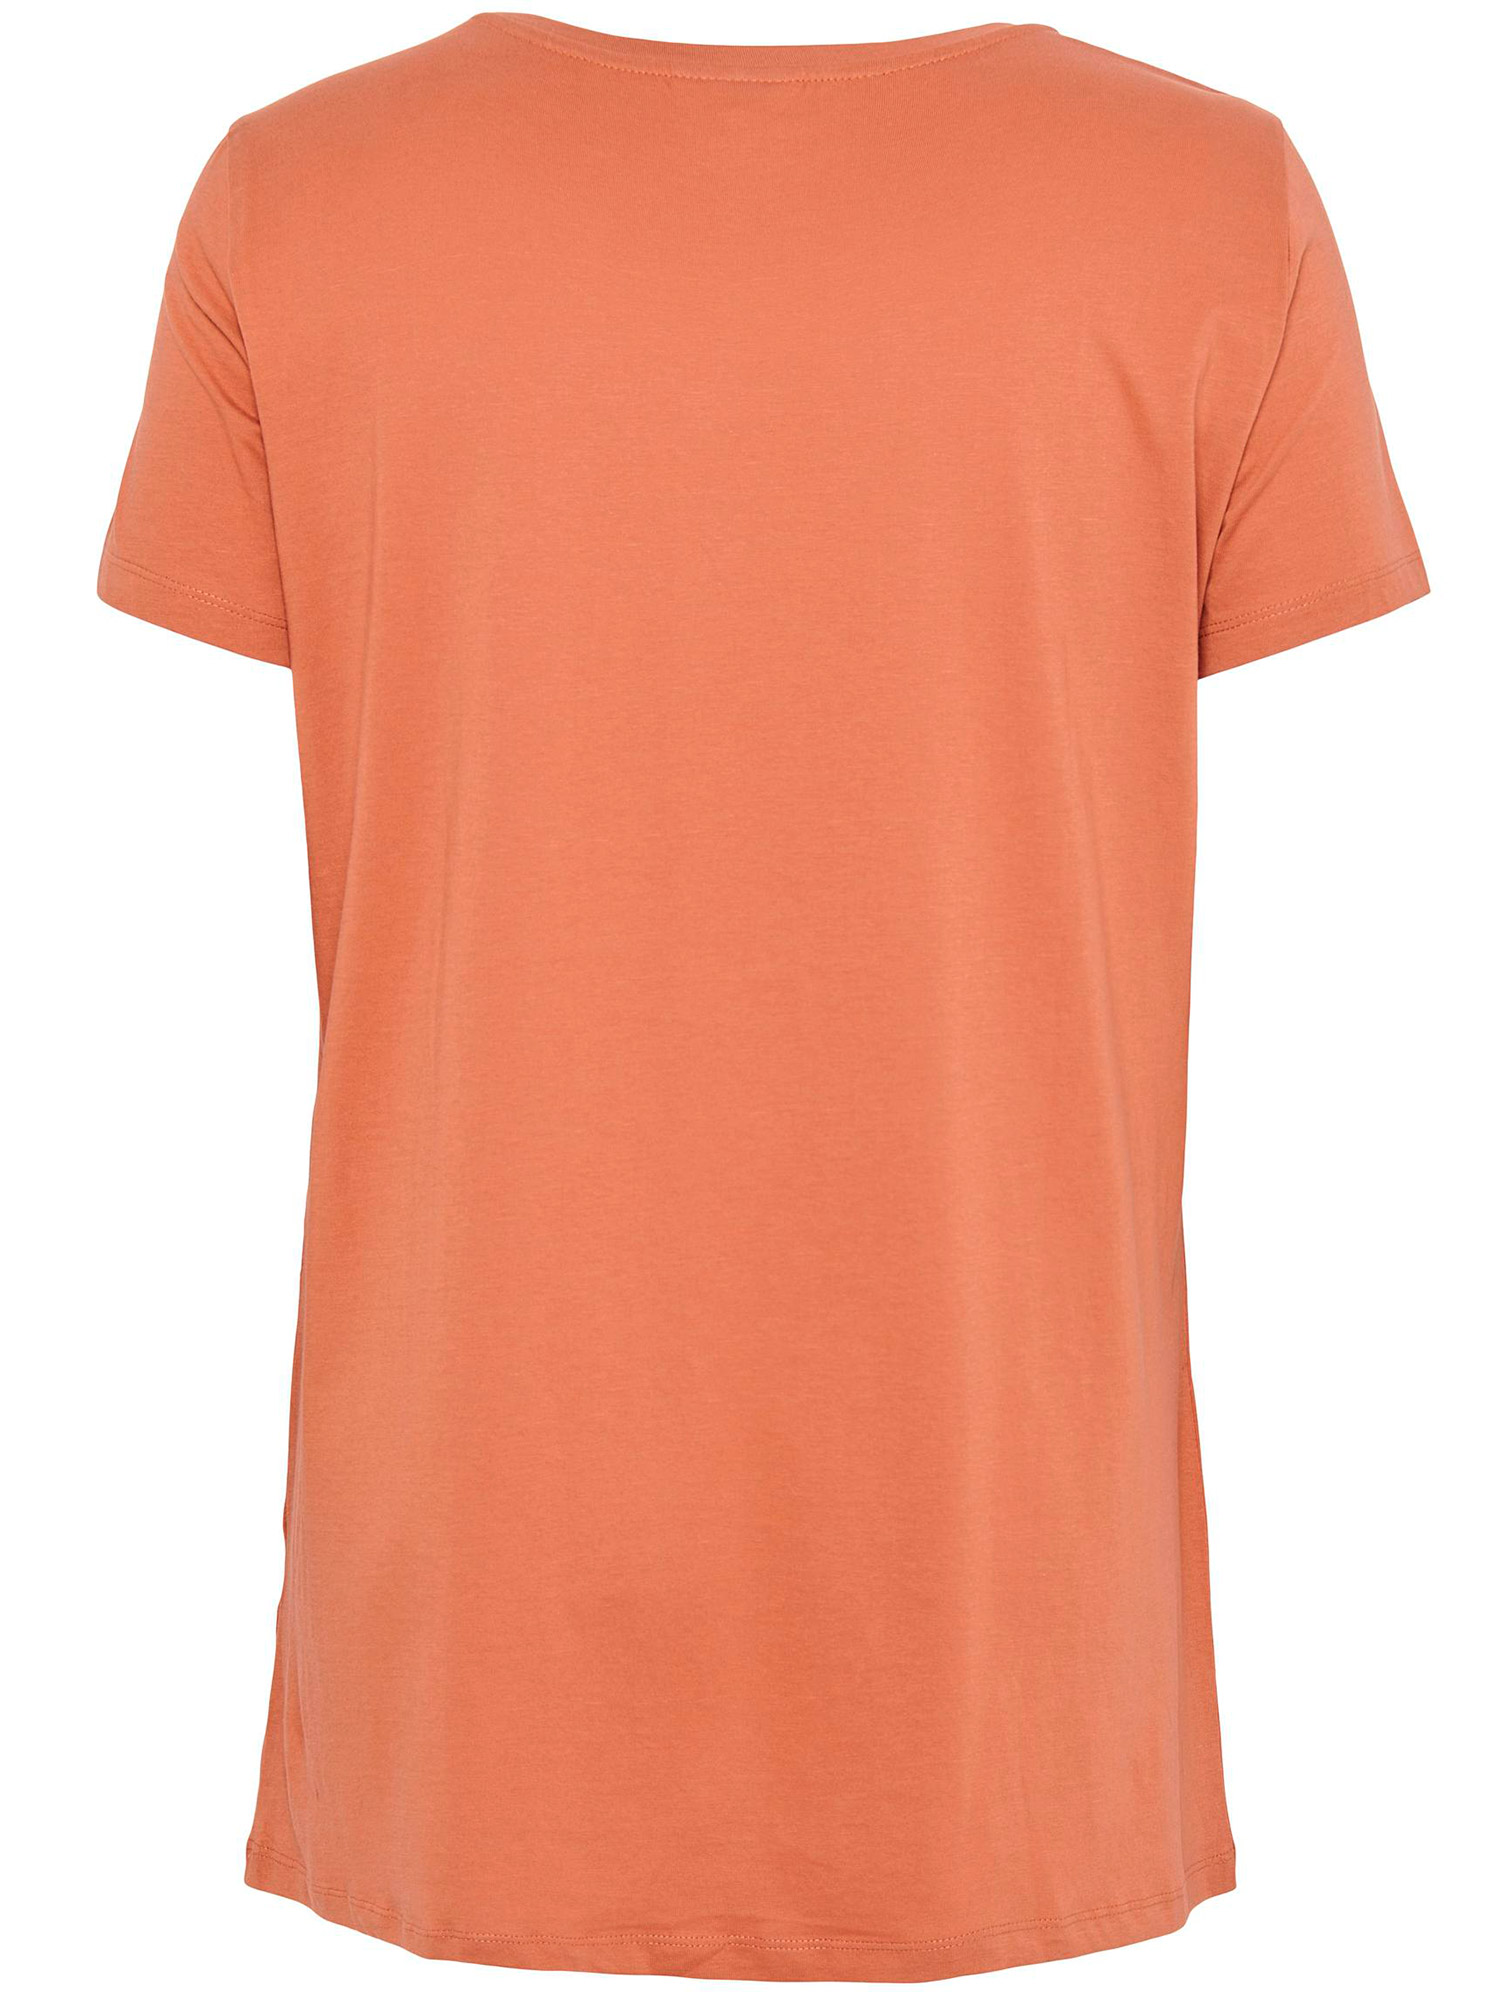 MOLLIE - Rødbrun bomulds t-shirt med hvid tryk fra Only Carmakoma